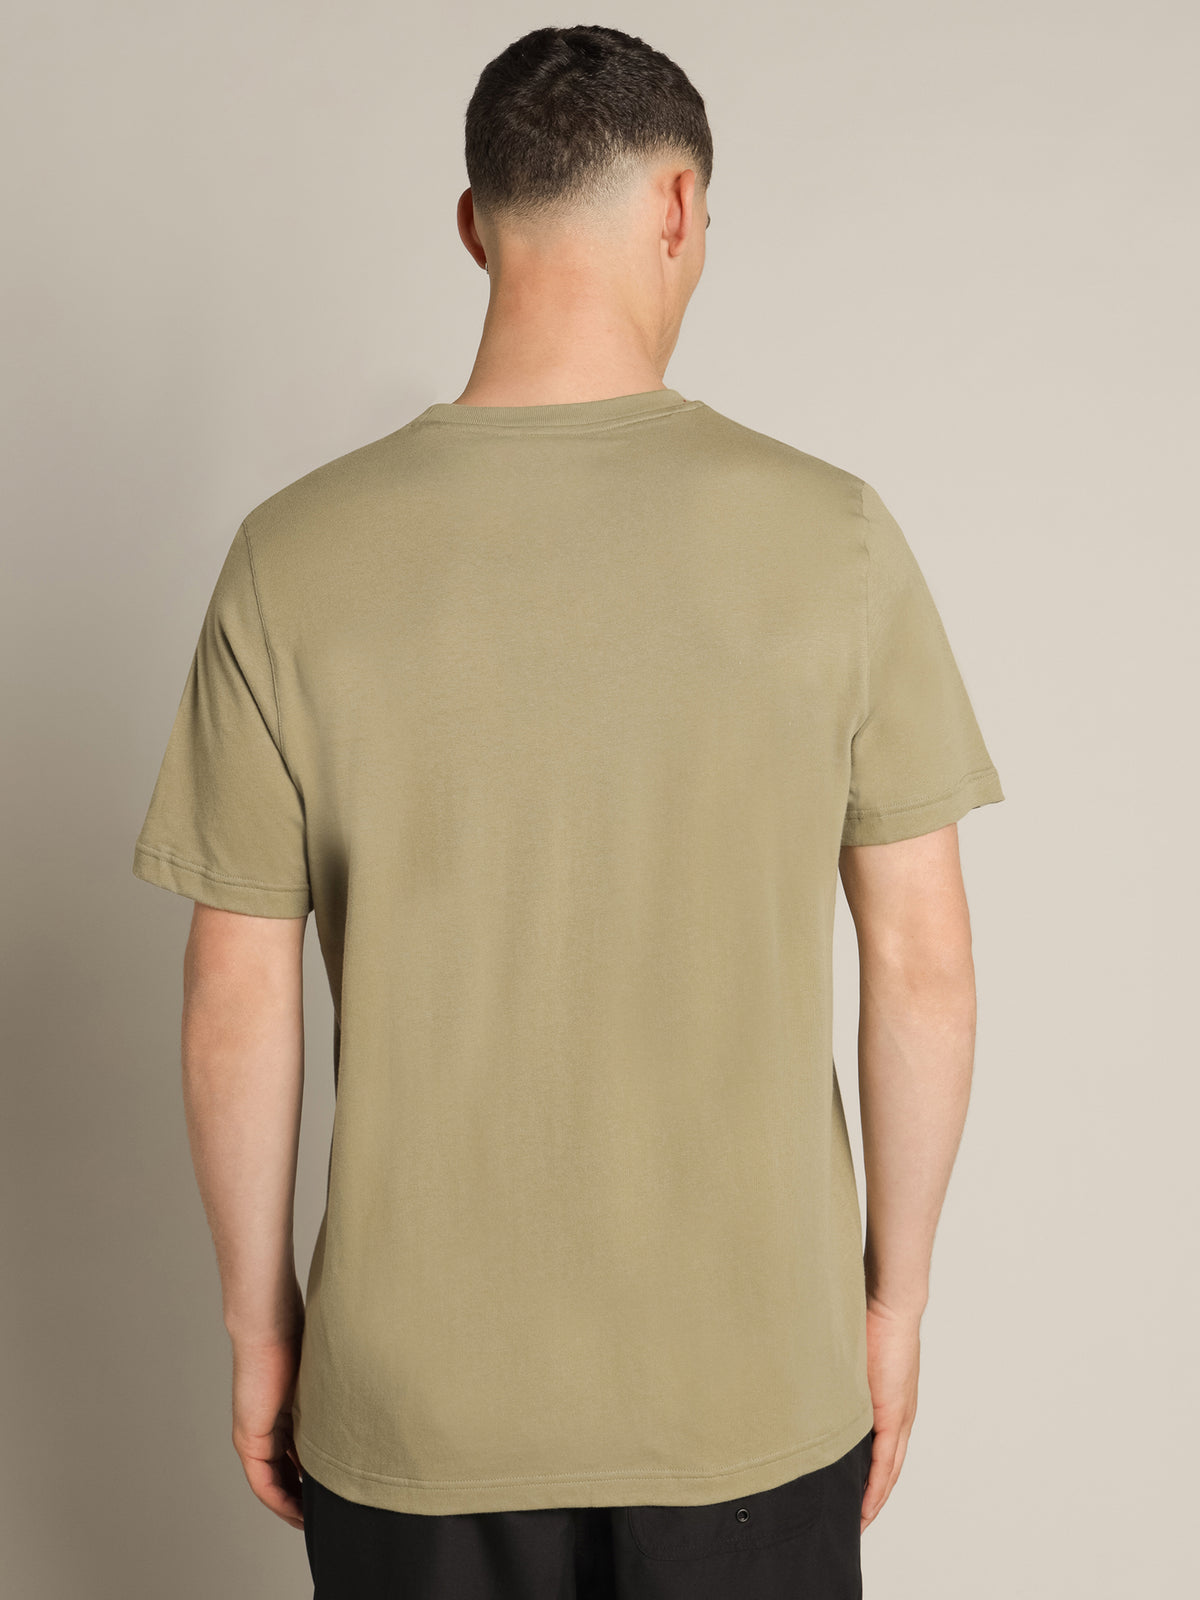 T-Shirt in Orbit Green